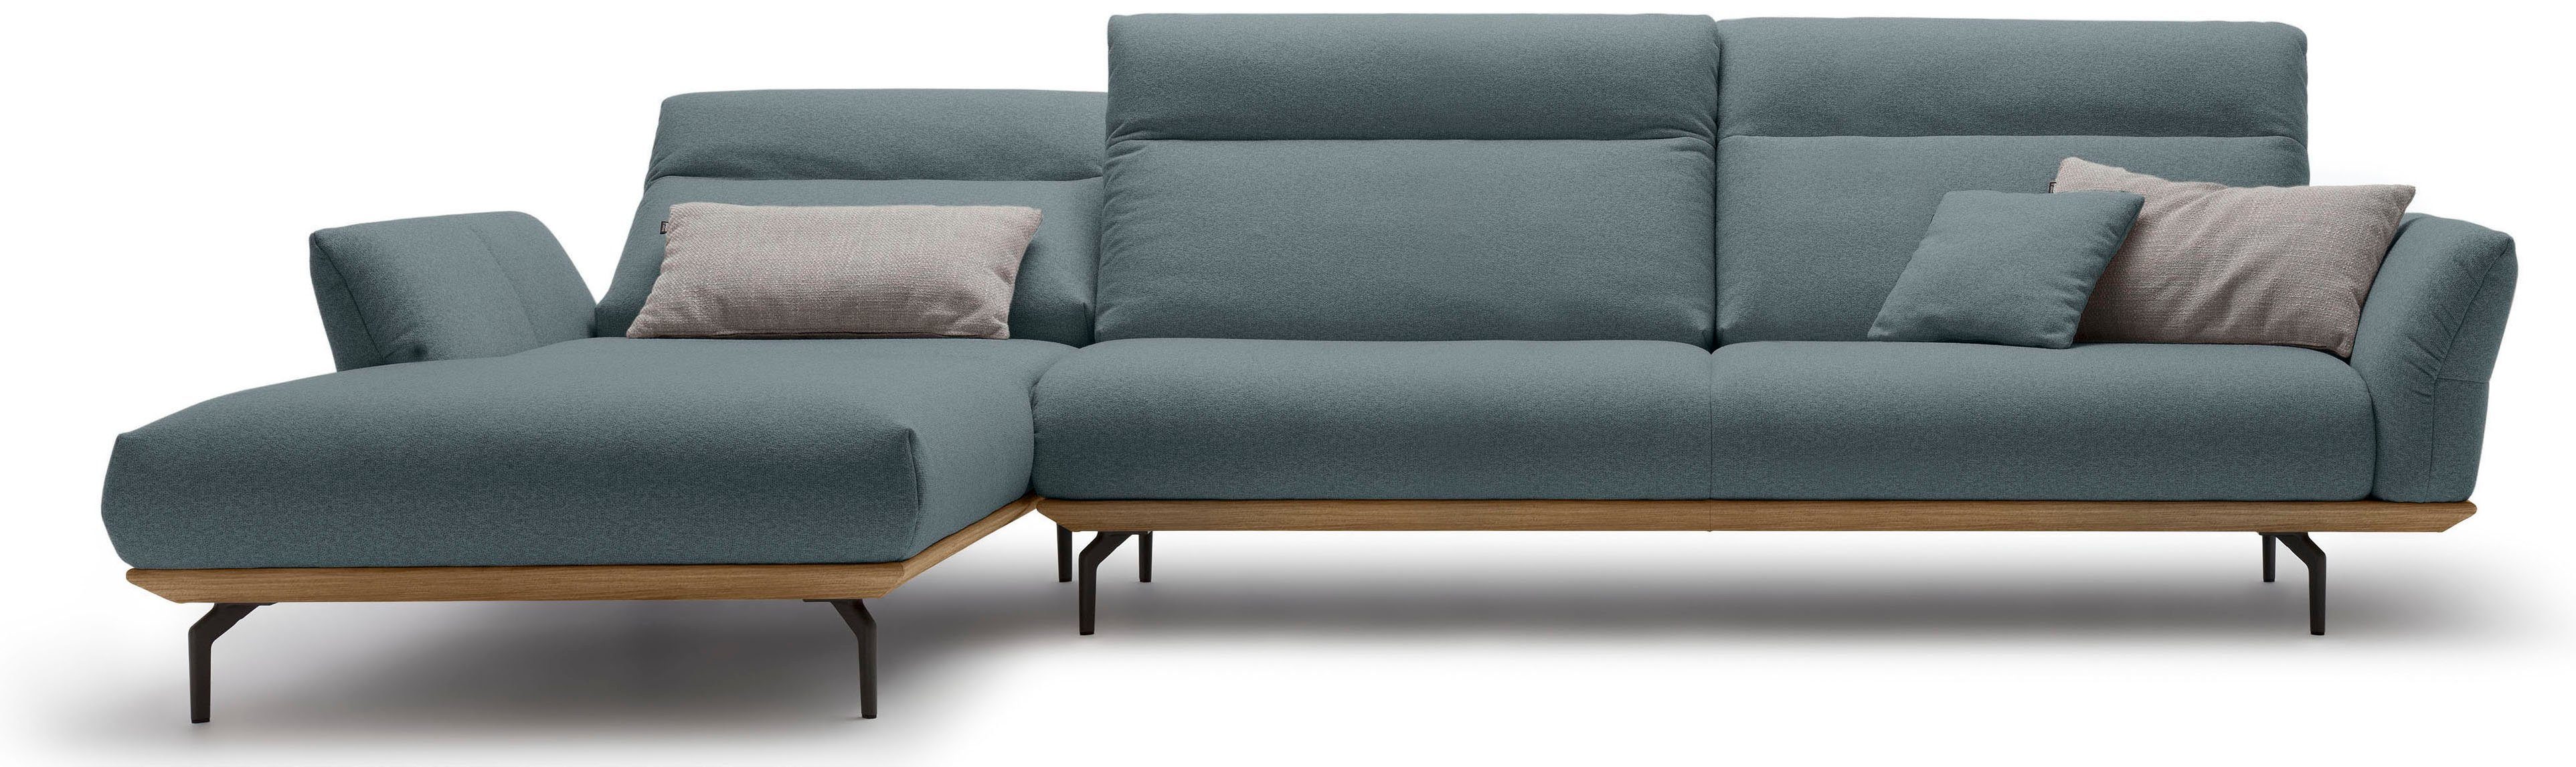 hülsta sofa cm Nussbaum, 338 Ecksofa Umbragrau, Sockel in hs.460, in Winkelfüße Breite